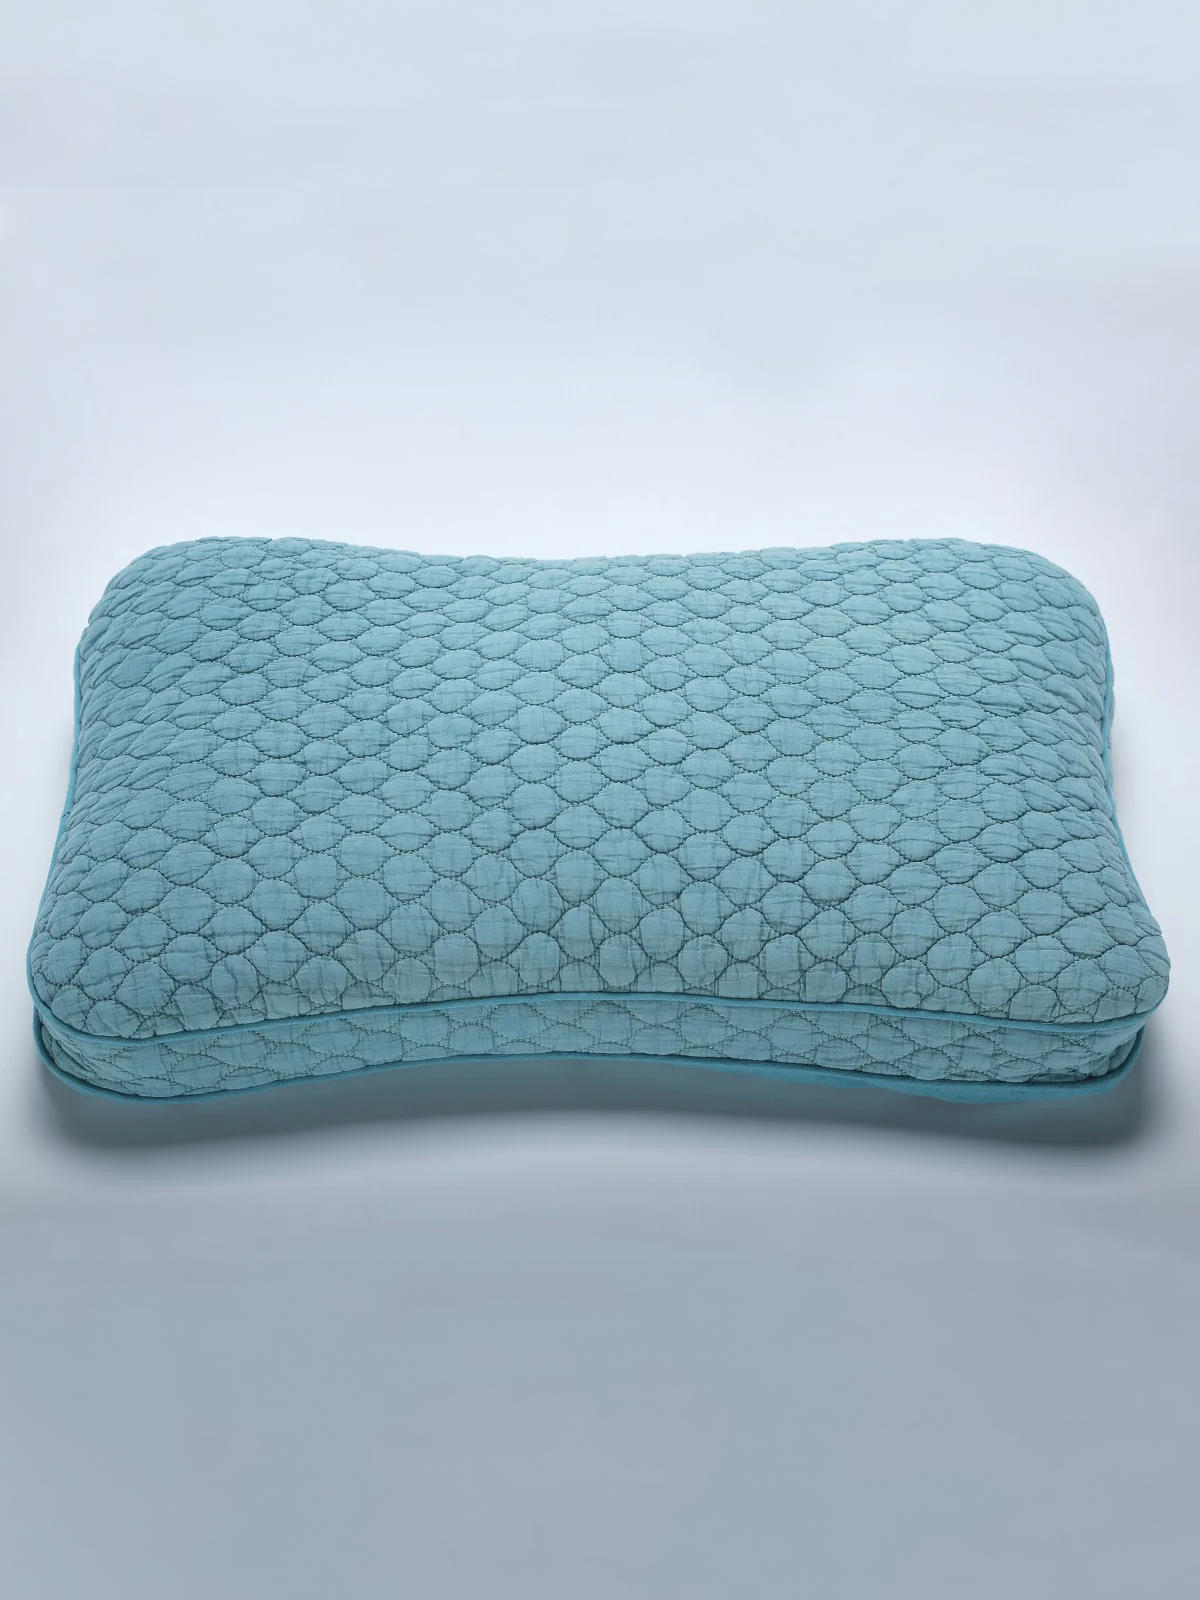 Rectangular Buckwheat Pillow